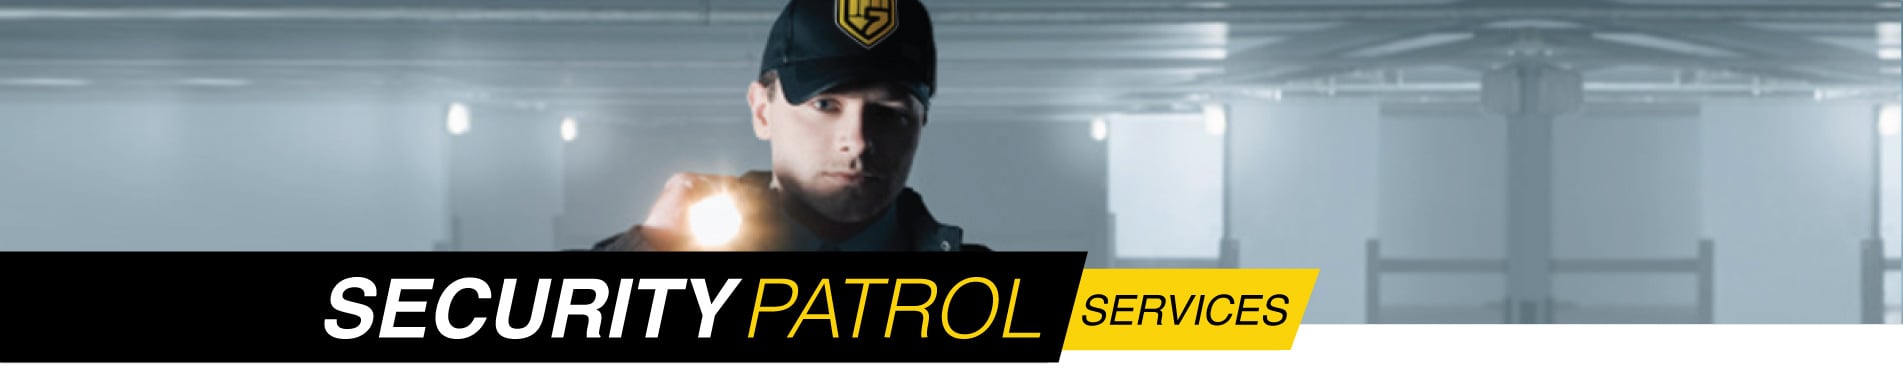 Houston area security patrol services